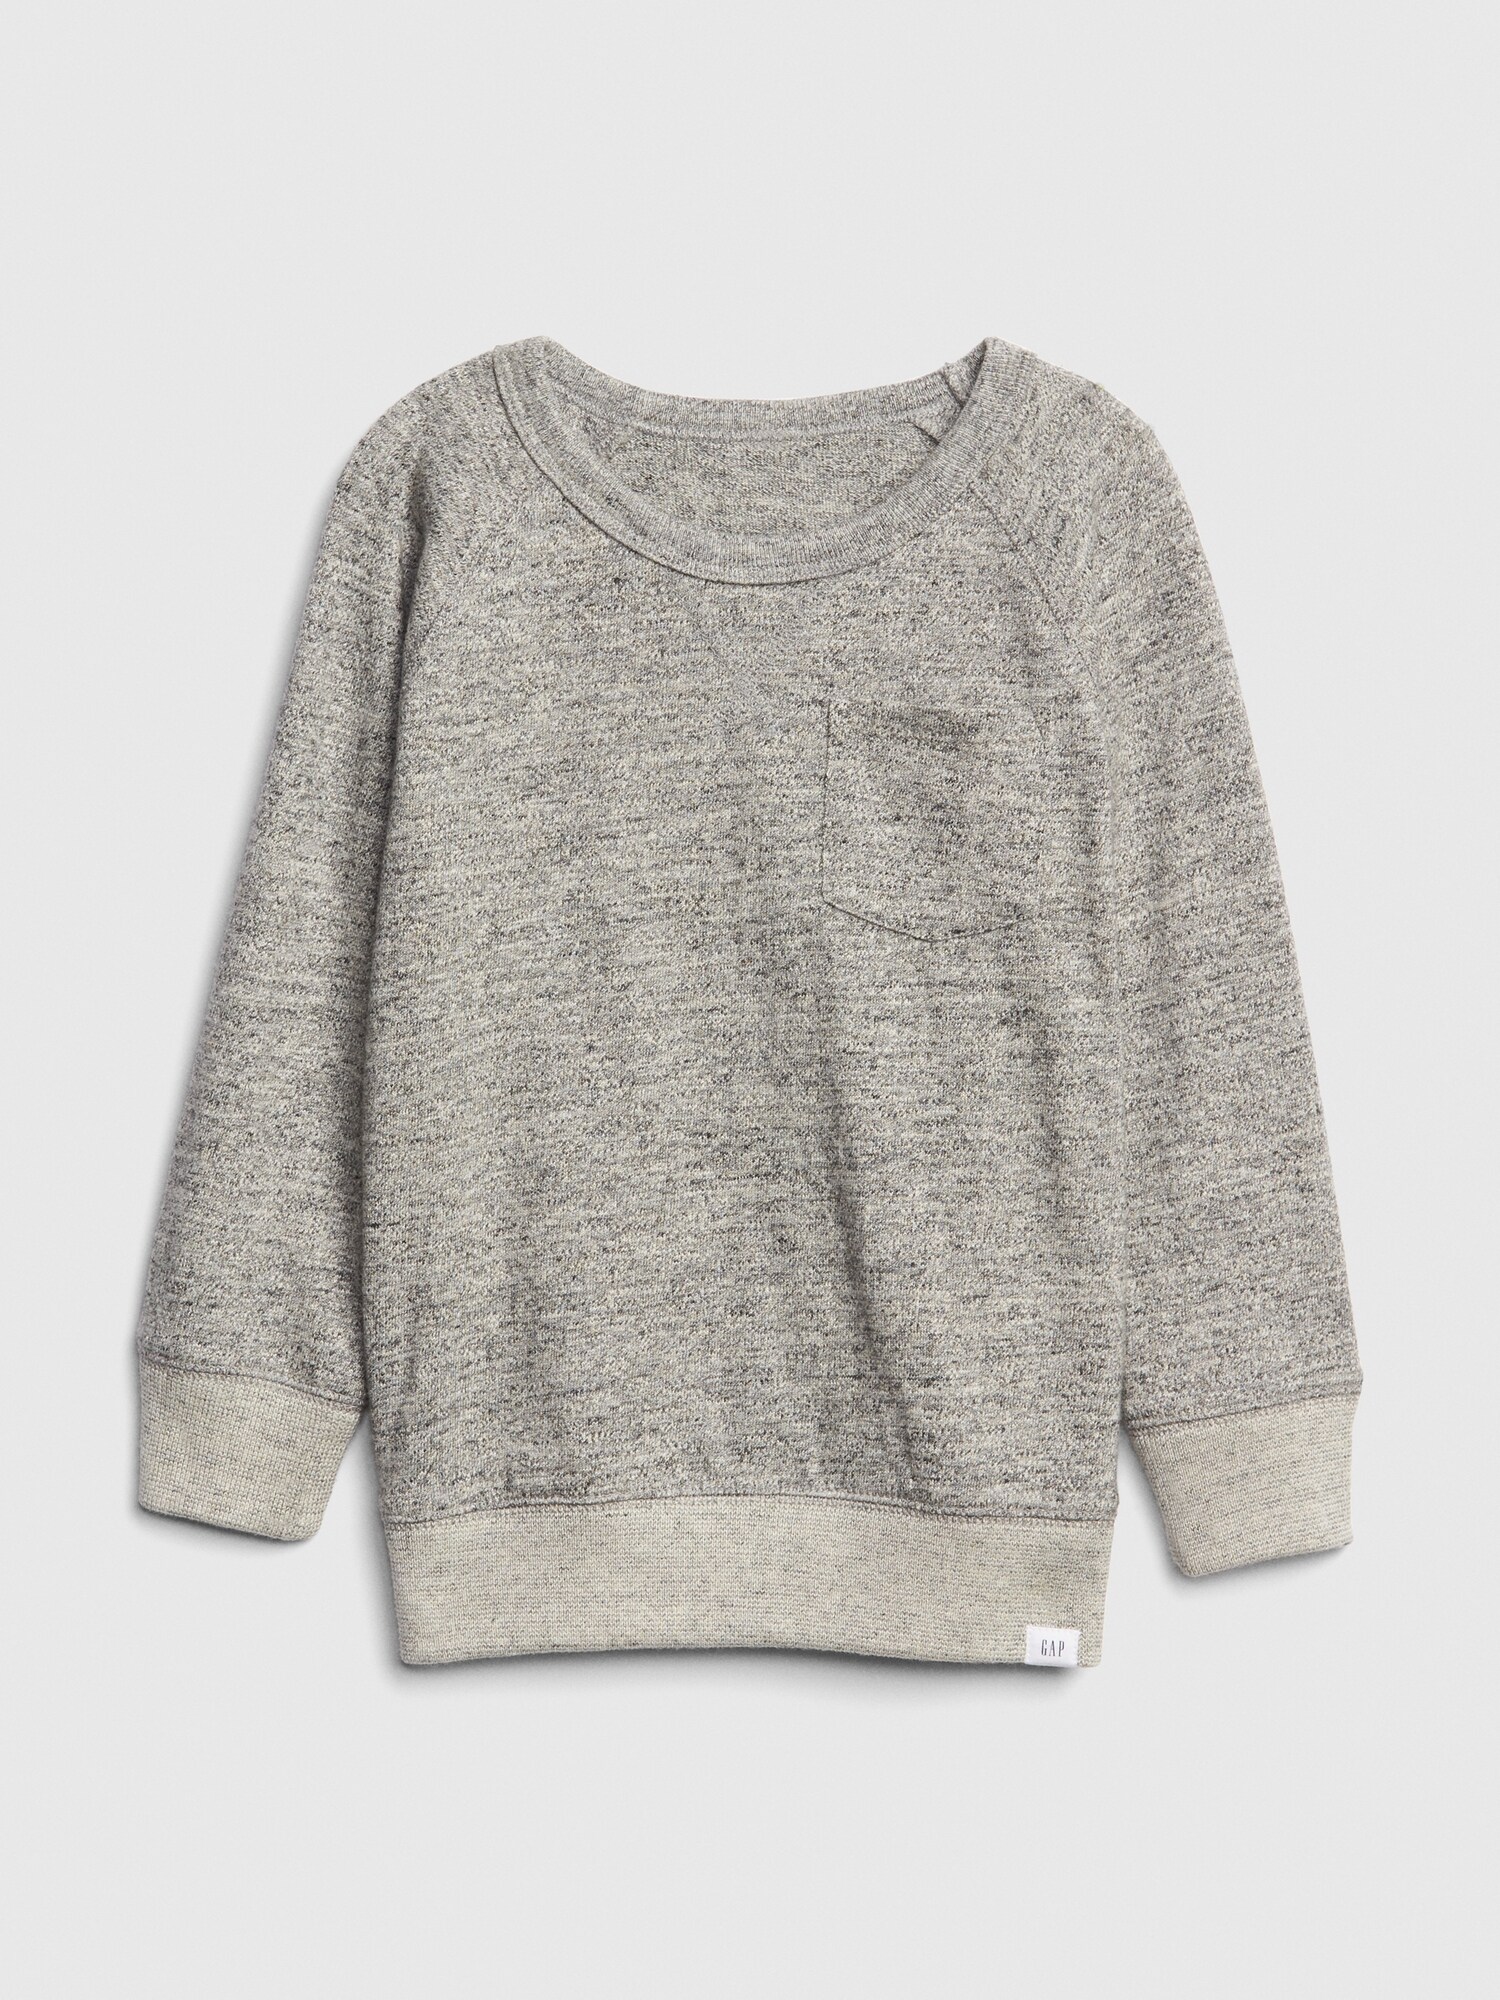 toddler gray sweatshirt